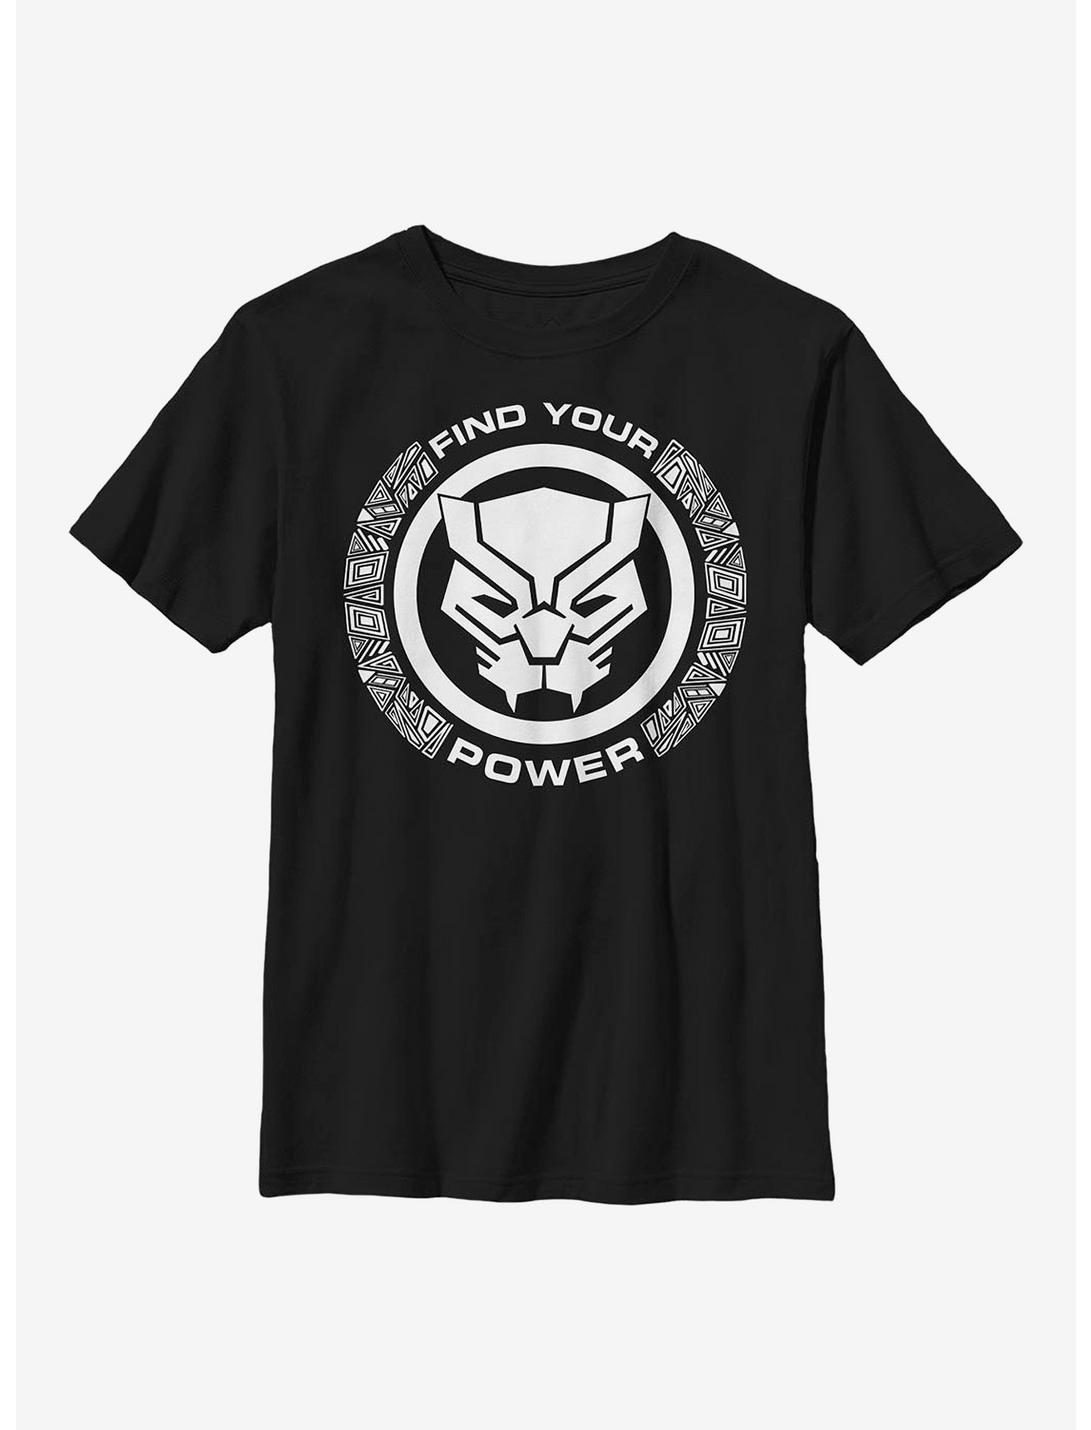 Marvel Black Panther Power Youth T-Shirt, BLACK, hi-res